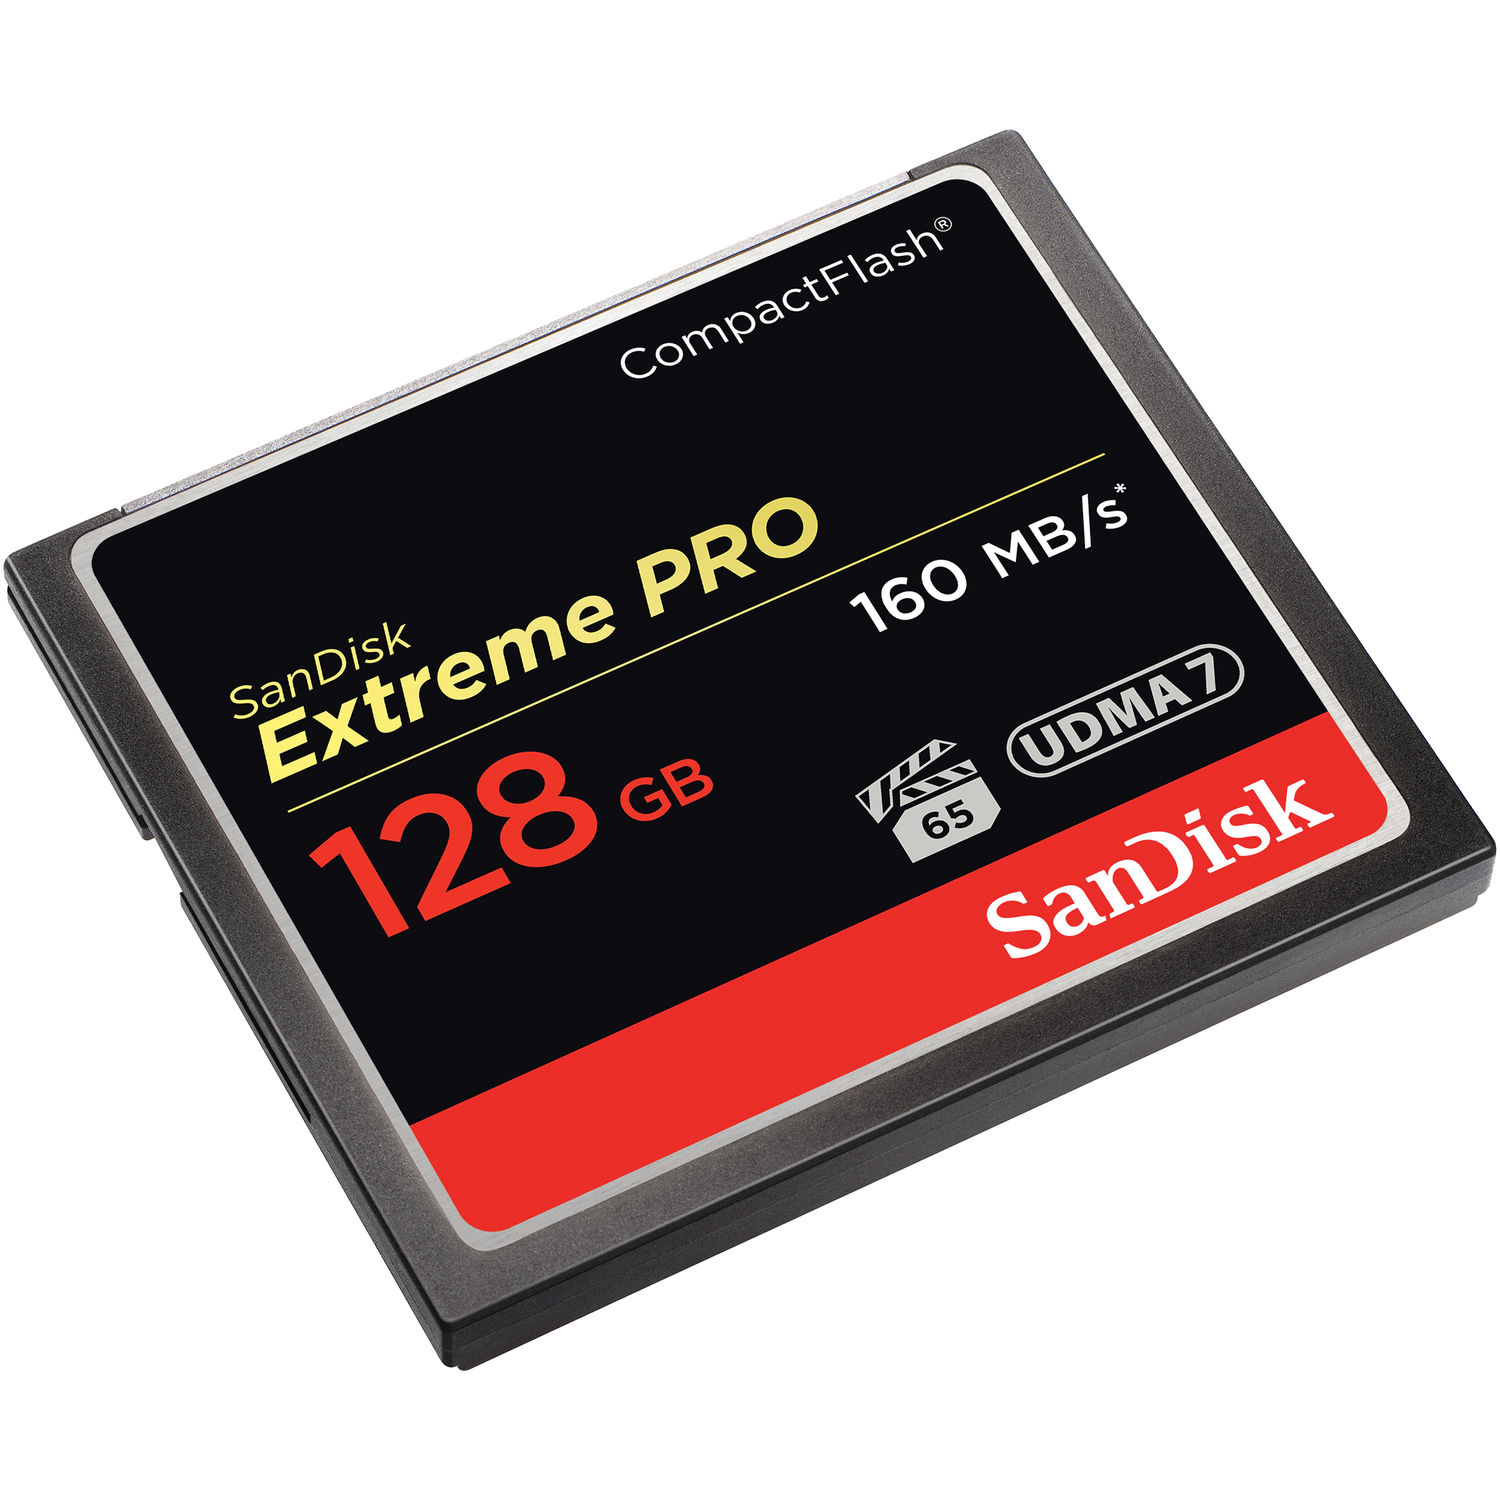 Sandisk 128GB Extreme Pro CompactFlash